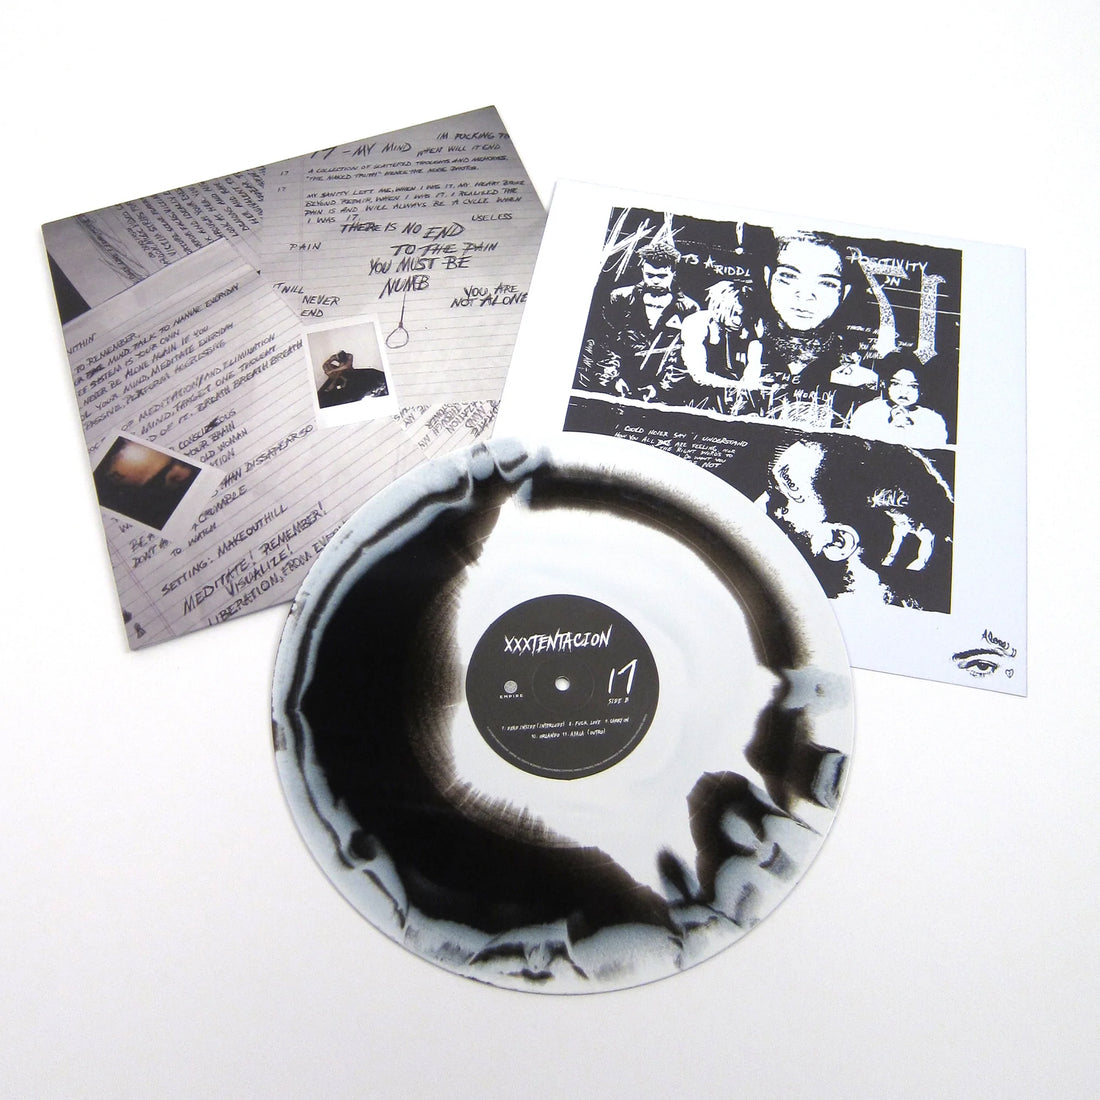 Southbound Records - Xxxtentation - 17 Black and White vinyl